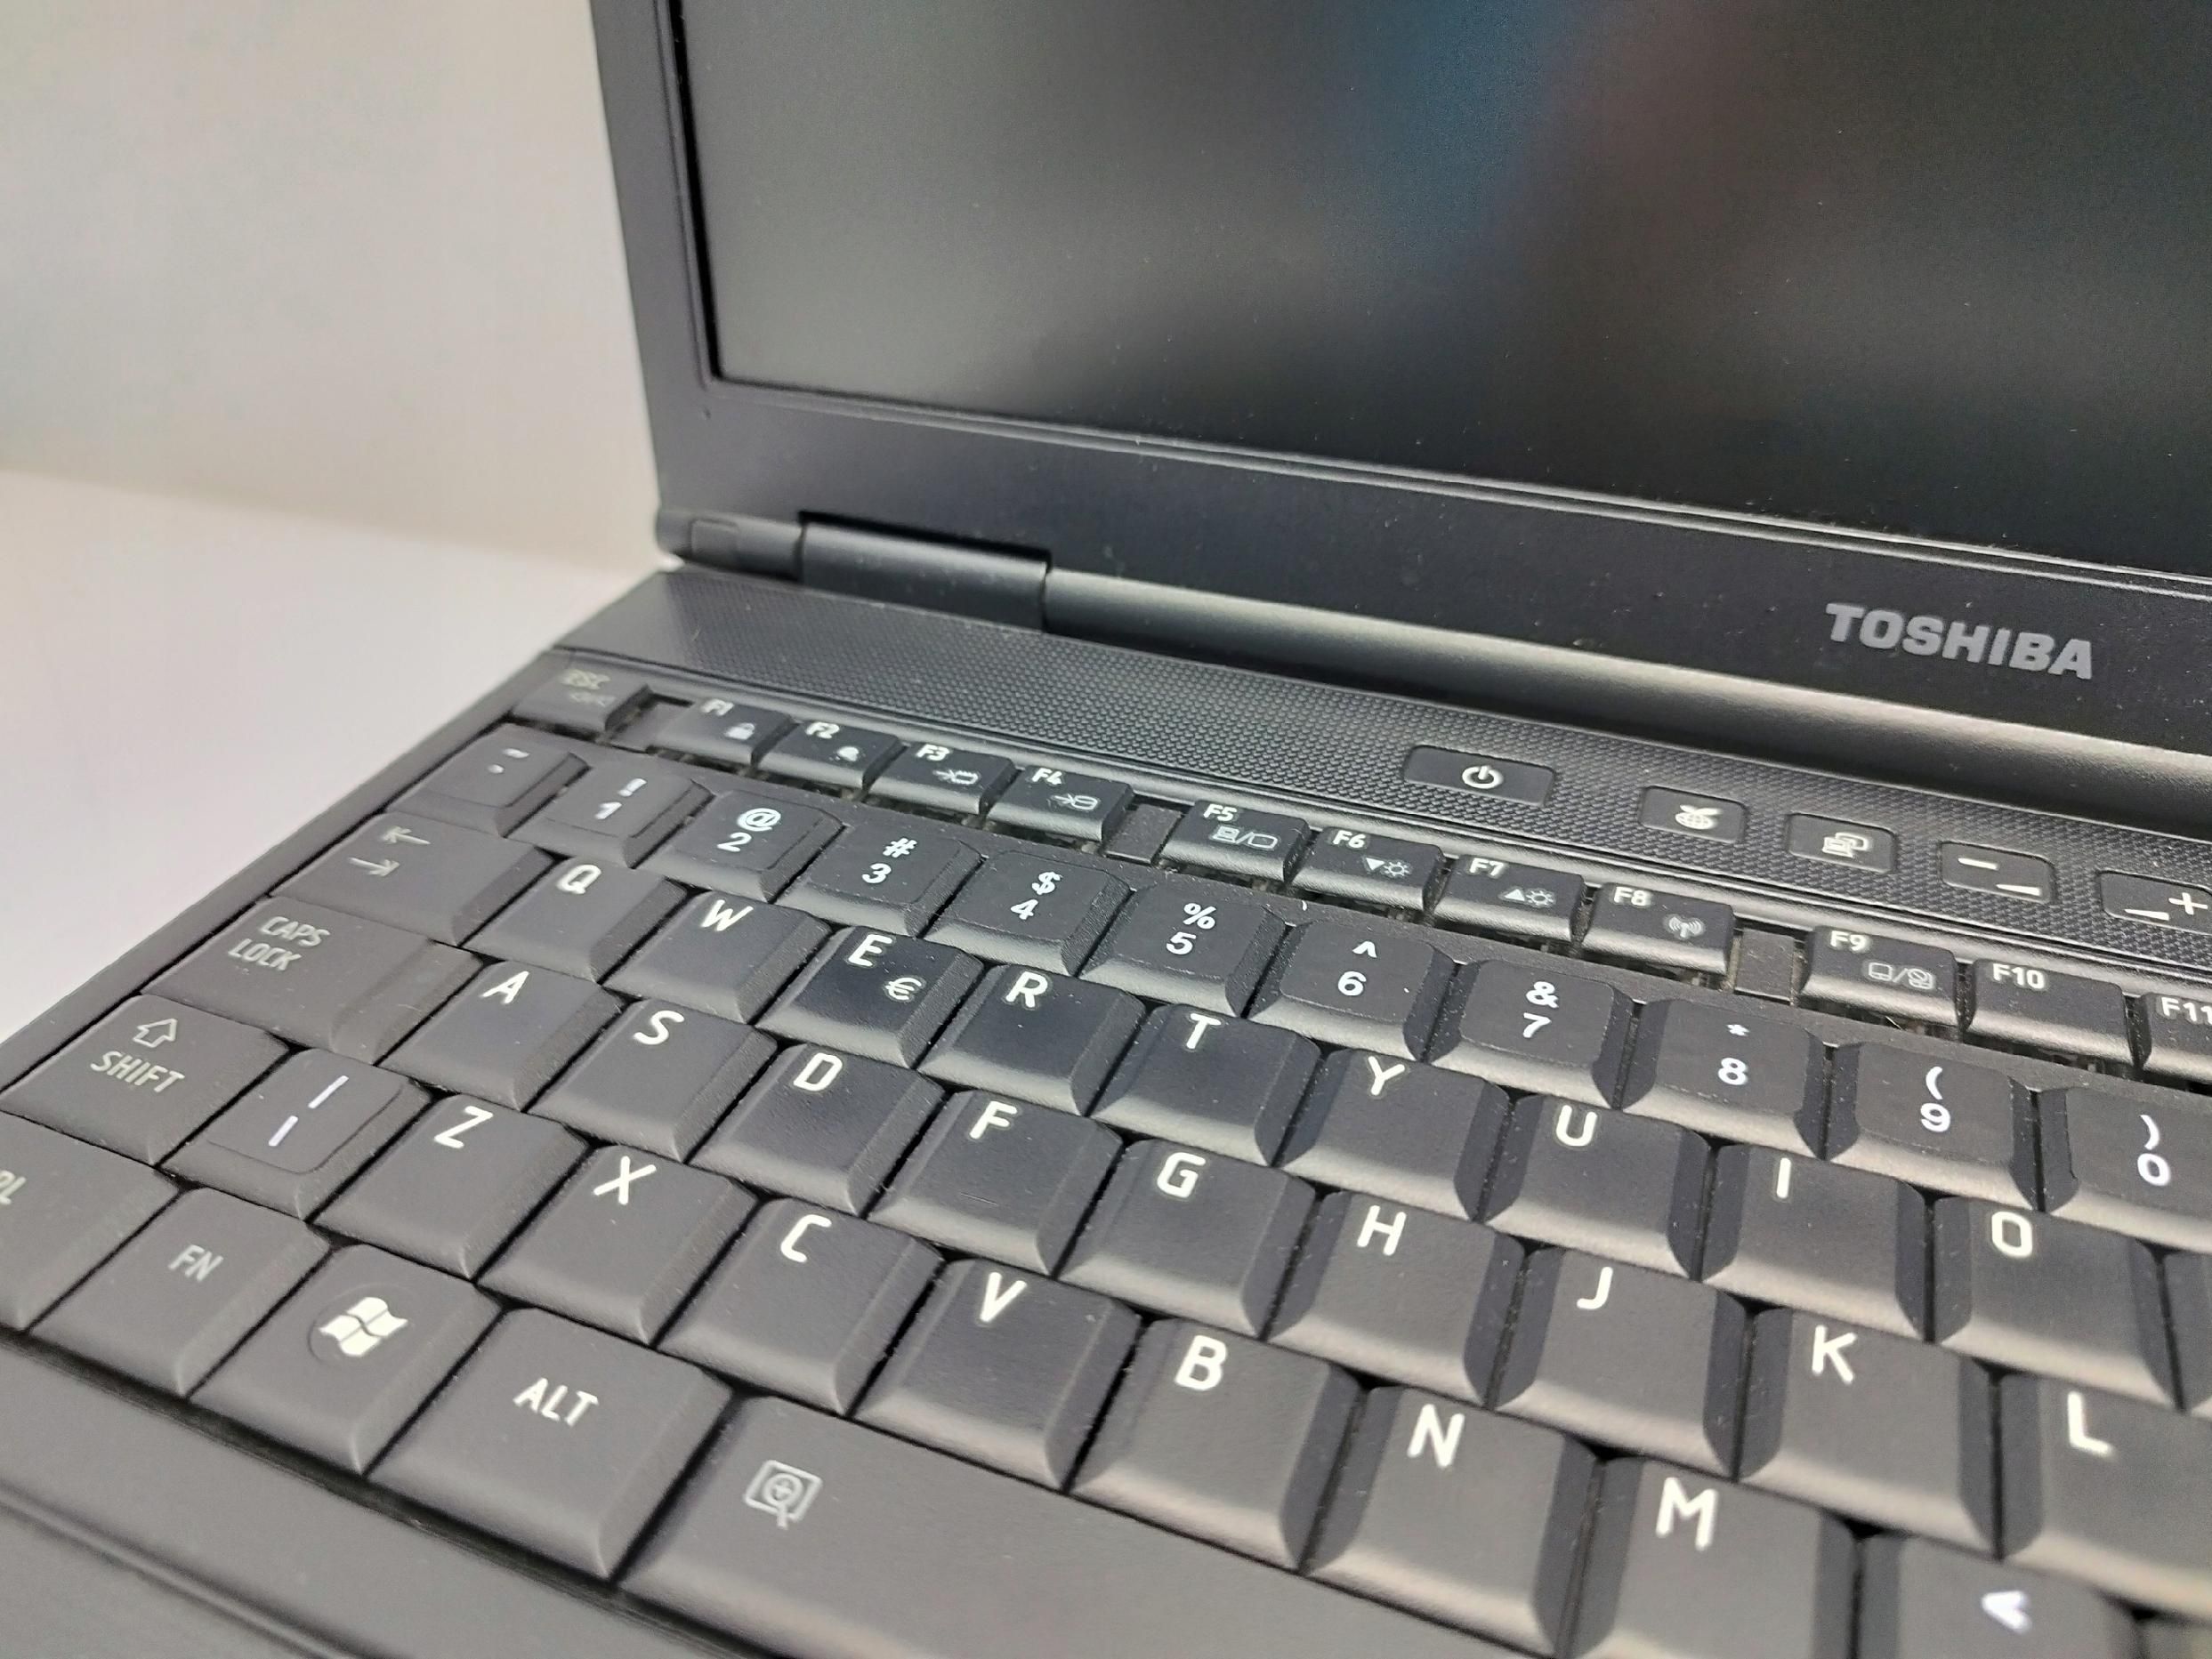 Laptop Toshiba A11 Core I5 2X 2.67Ghz 4Gb 320Gb Windows 7 Com Rs232